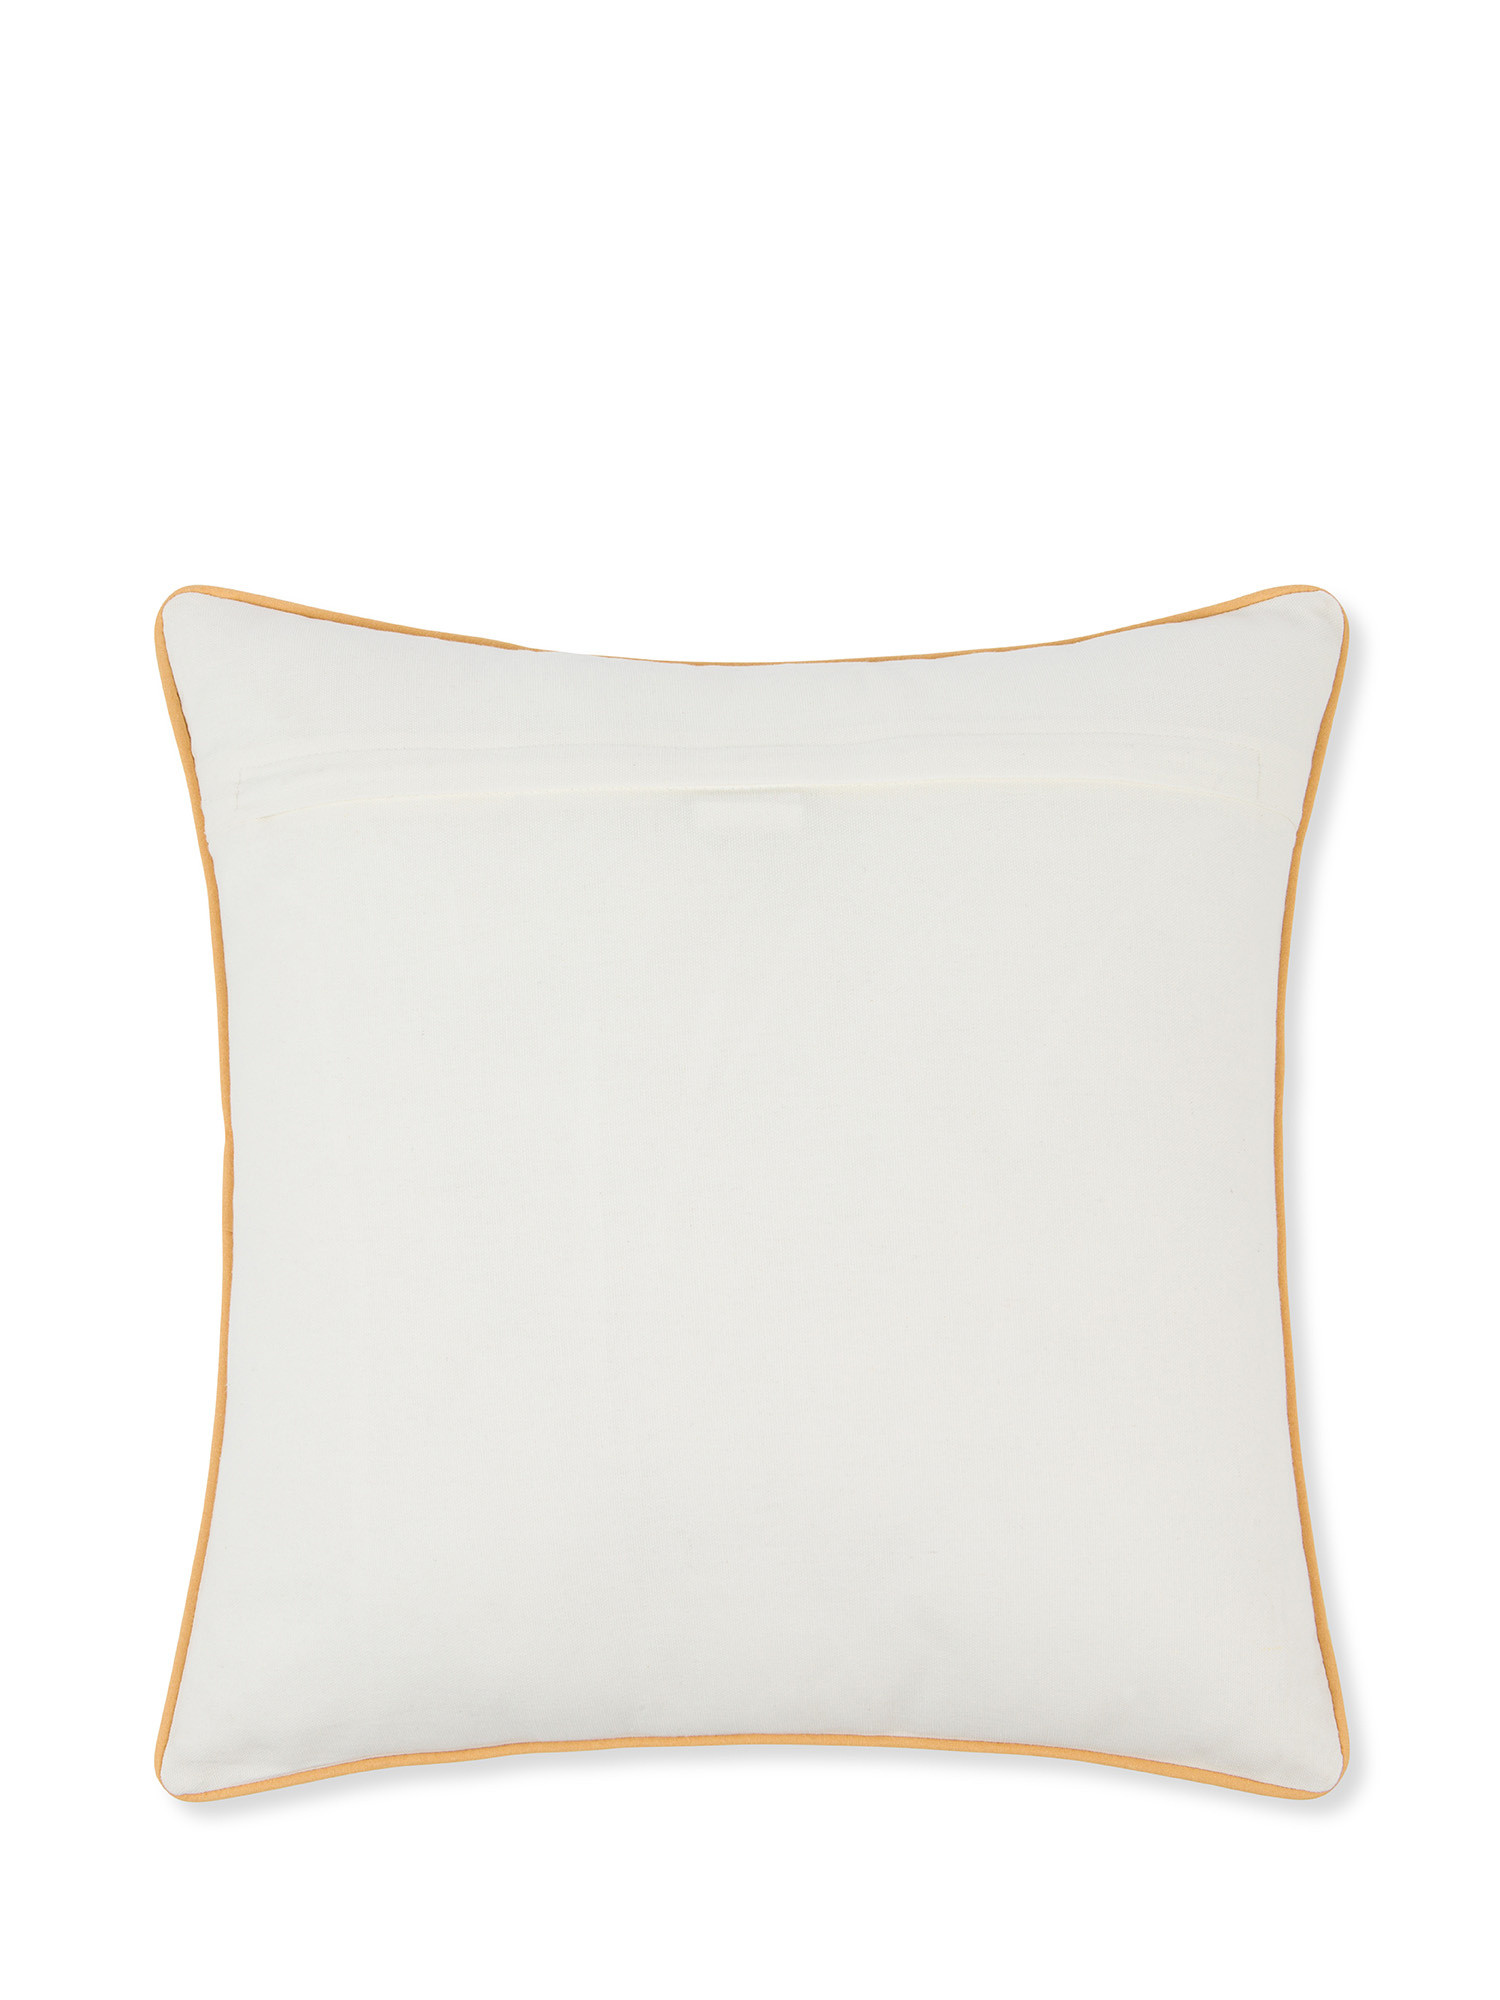 Cuscino ricamato con motivo fiori 45x45cm, Bianco, large image number 1